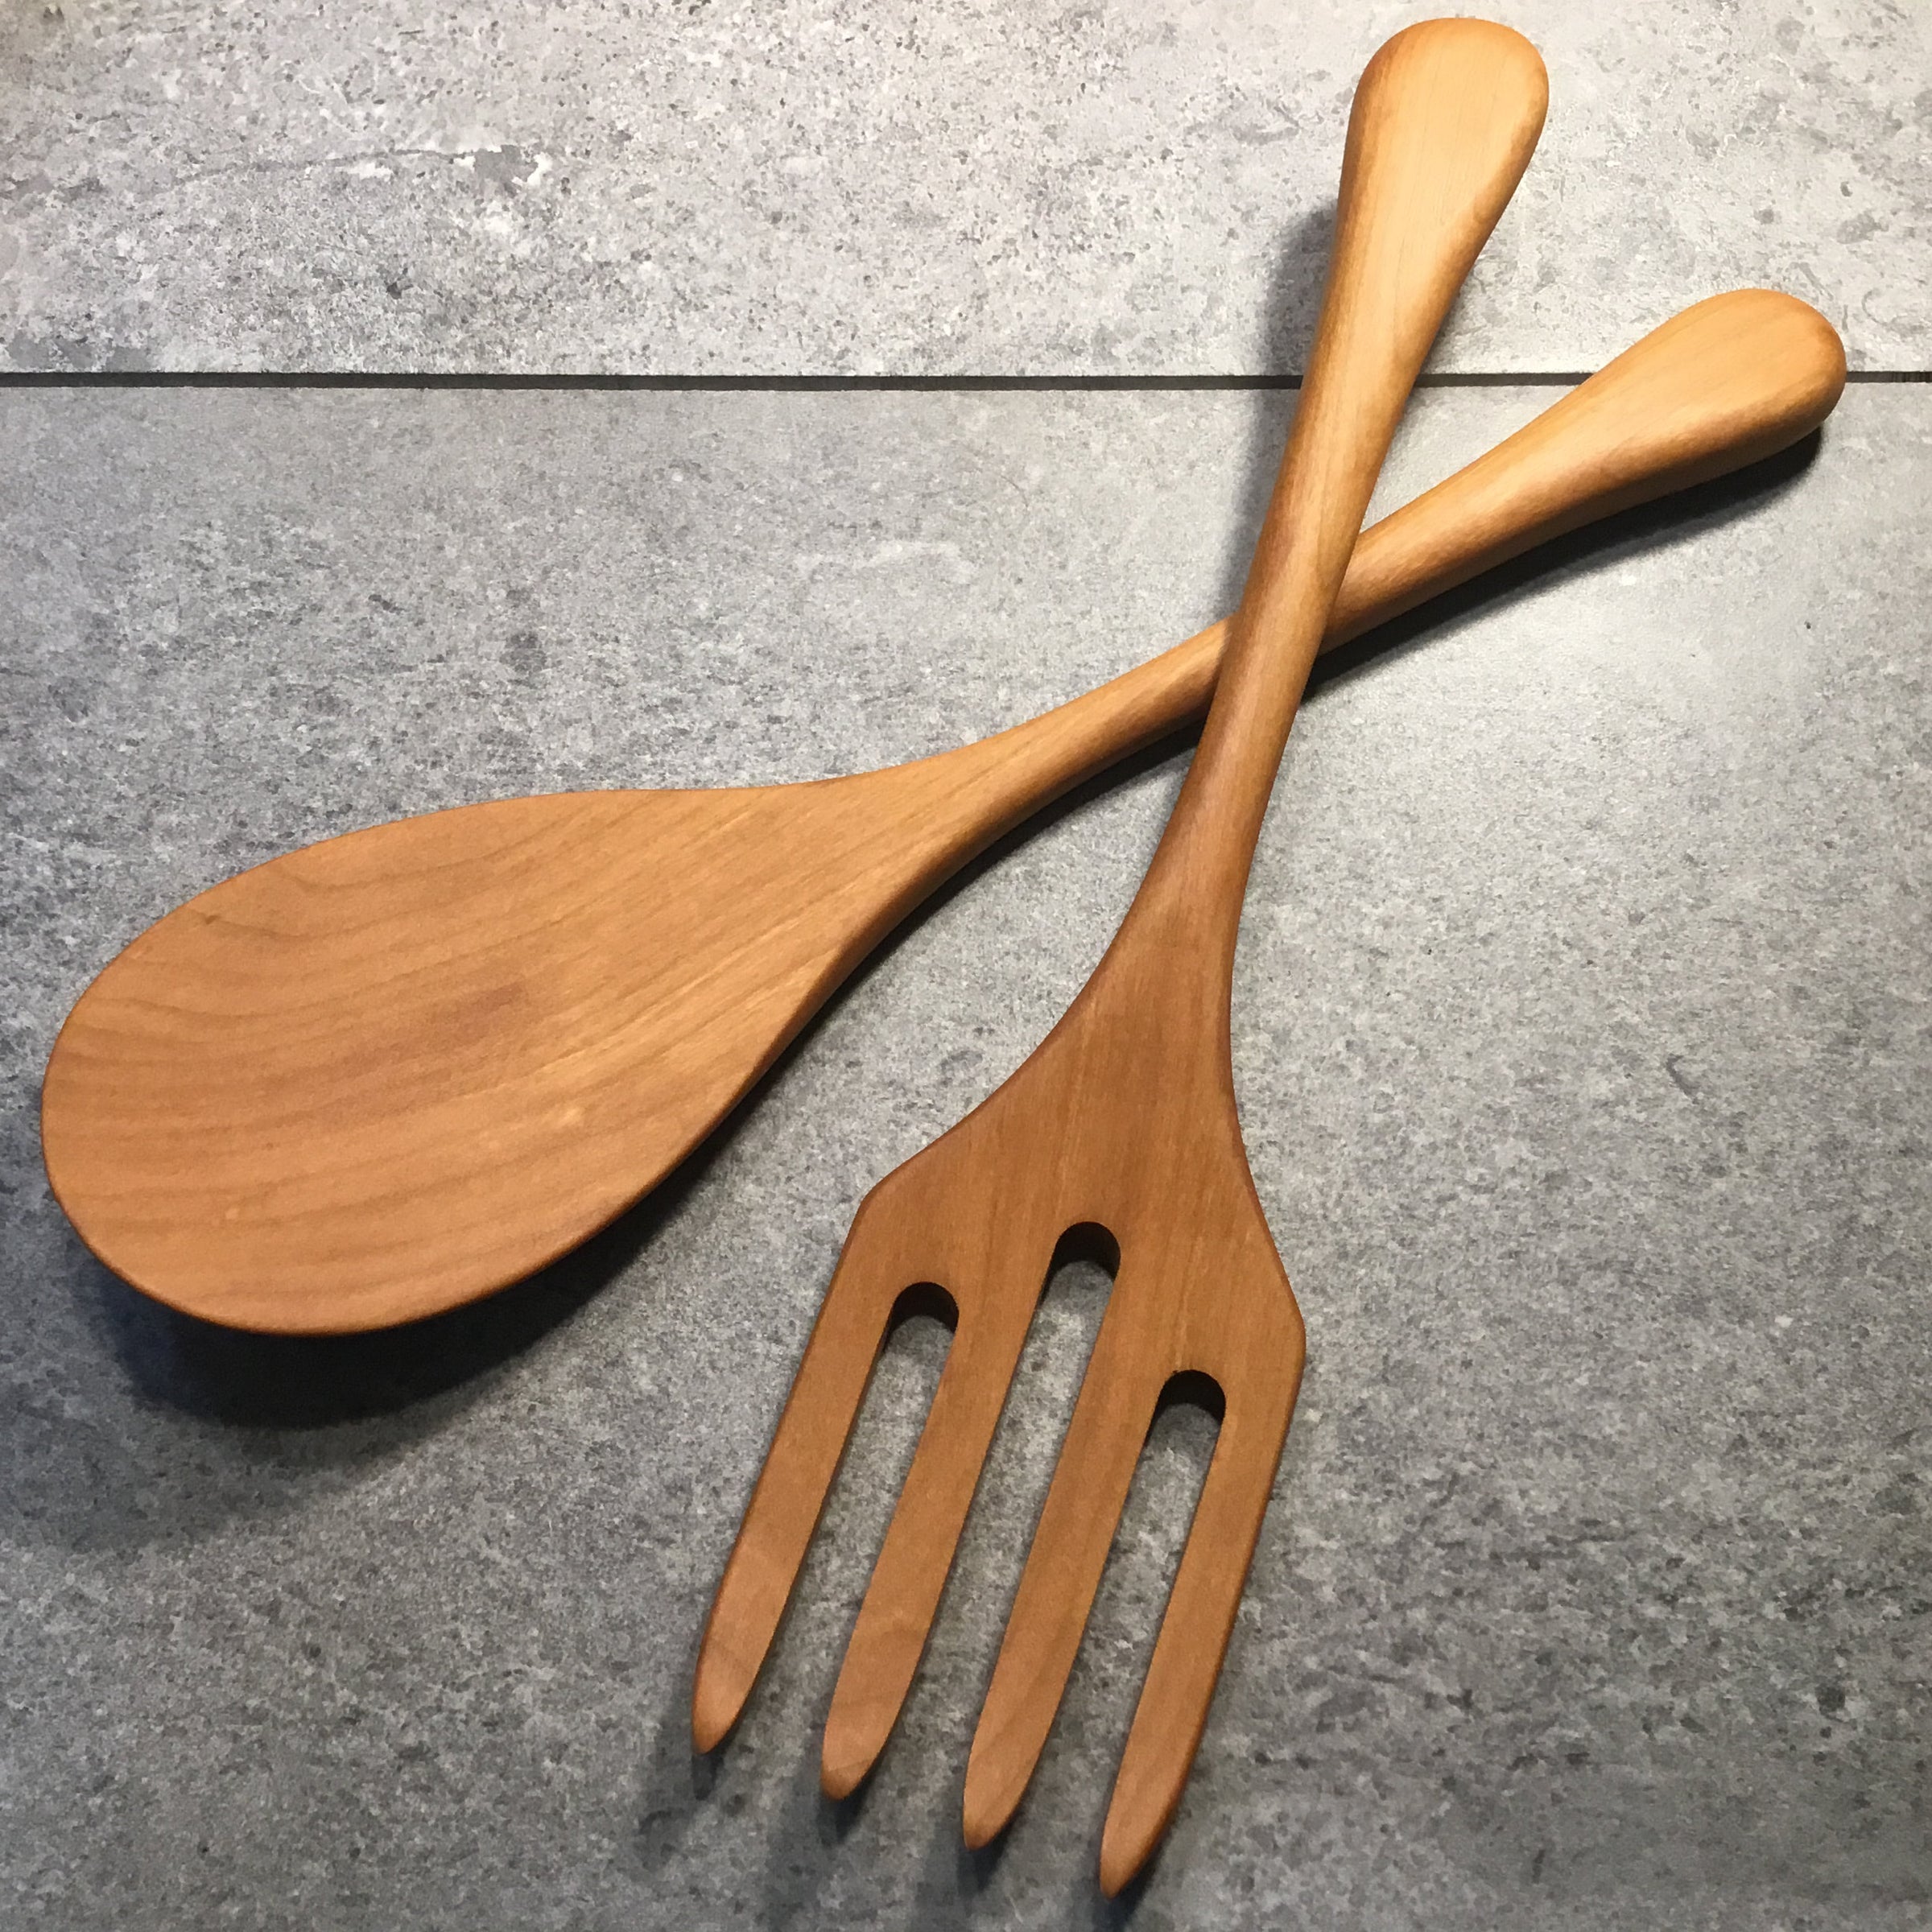 Handmade Wooden Kitchen Utensils, Measuring Spoon